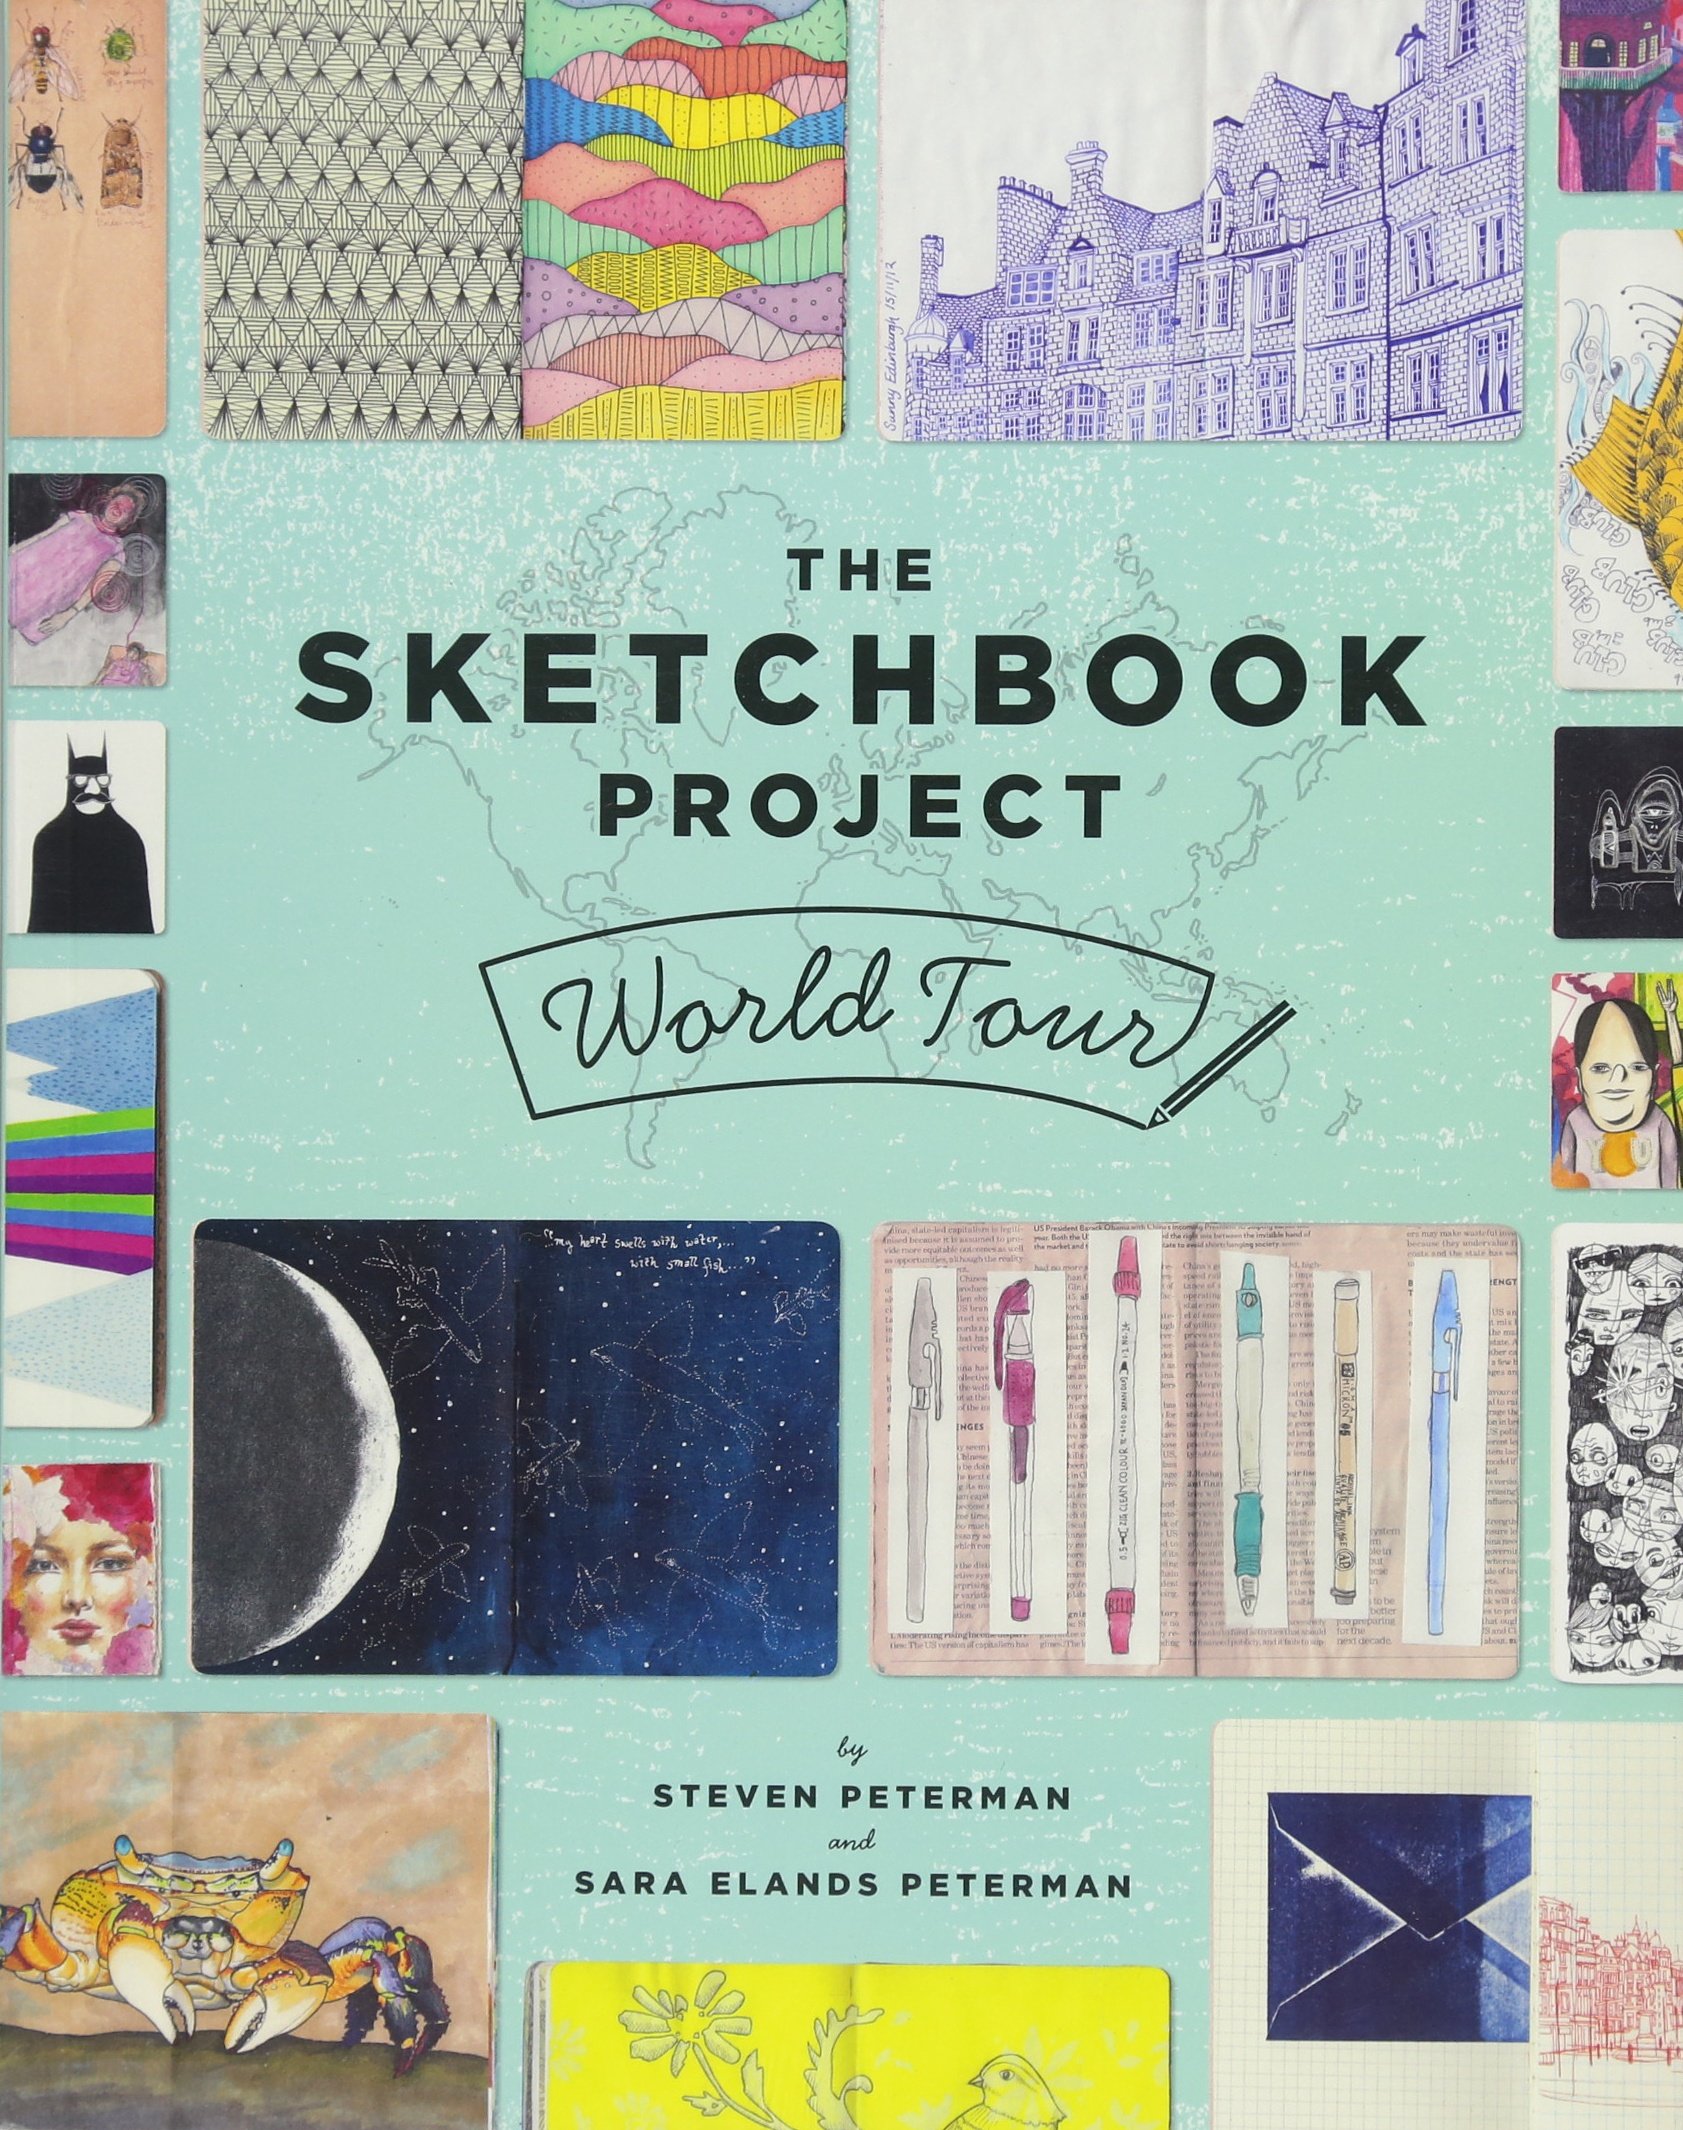 The Sketchbook Project World Tour - Steven Peterman and Sara Elands Peterman